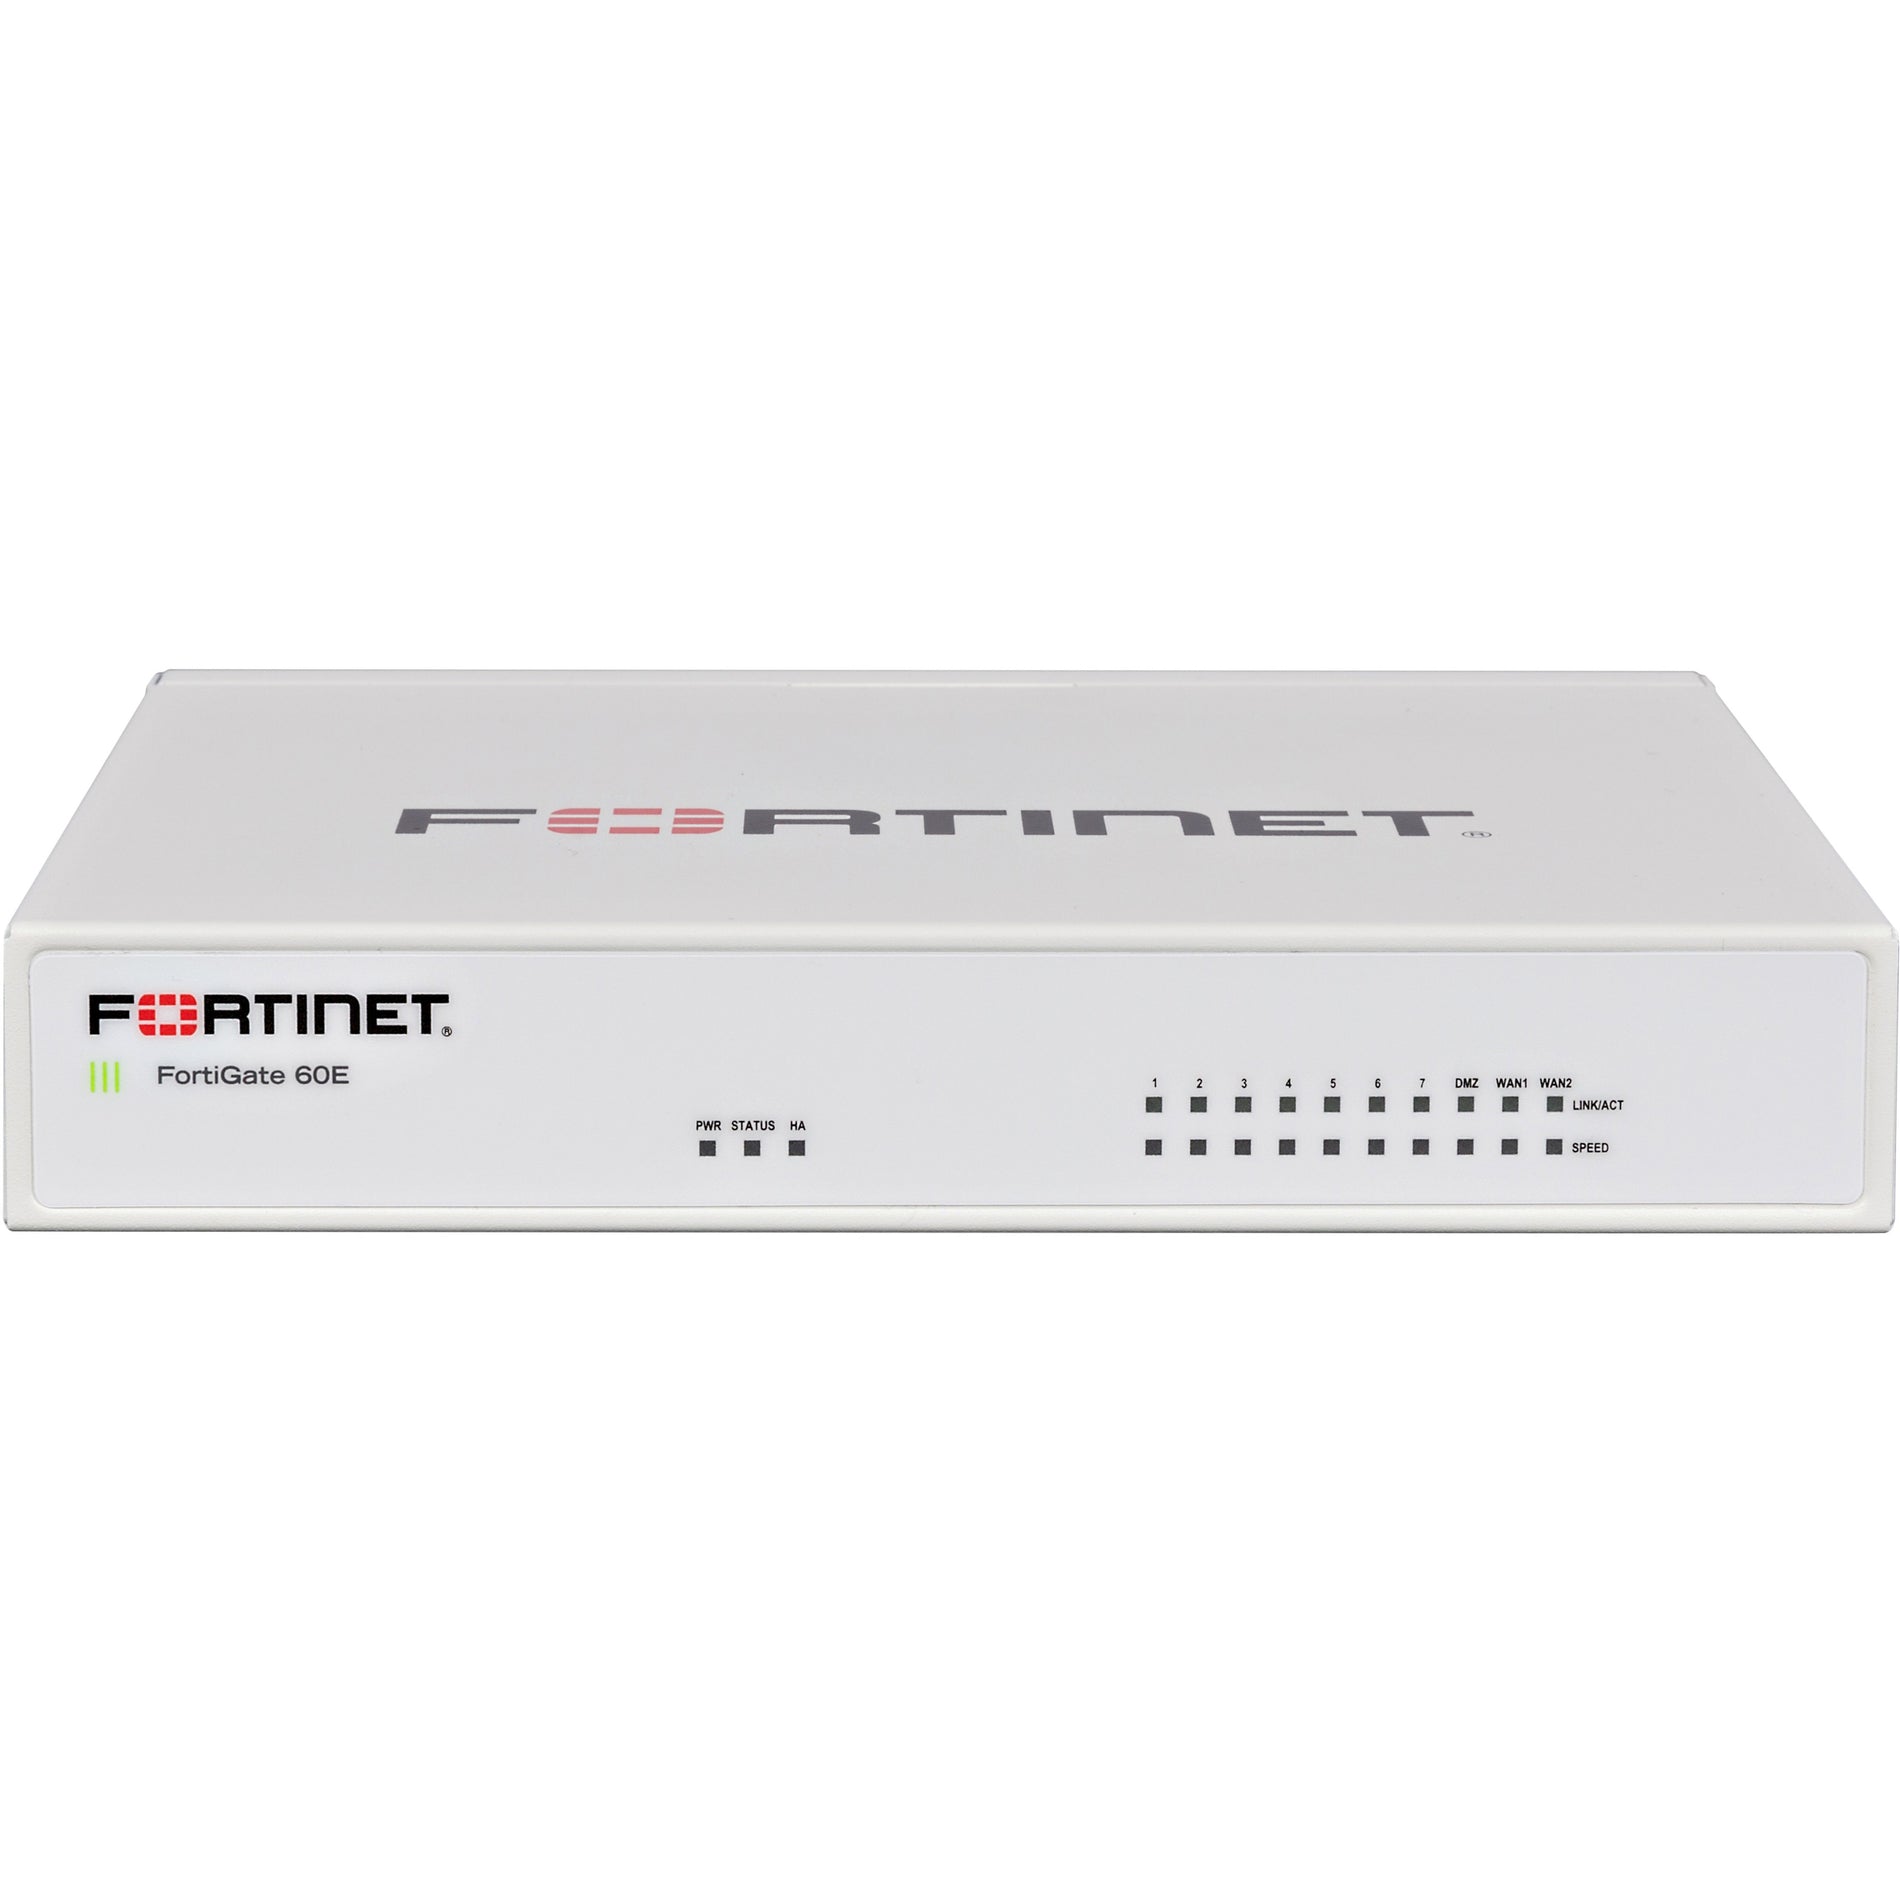 Fortinet FortiGate 60E Network Security/Firewall Appliance (FG-60E)